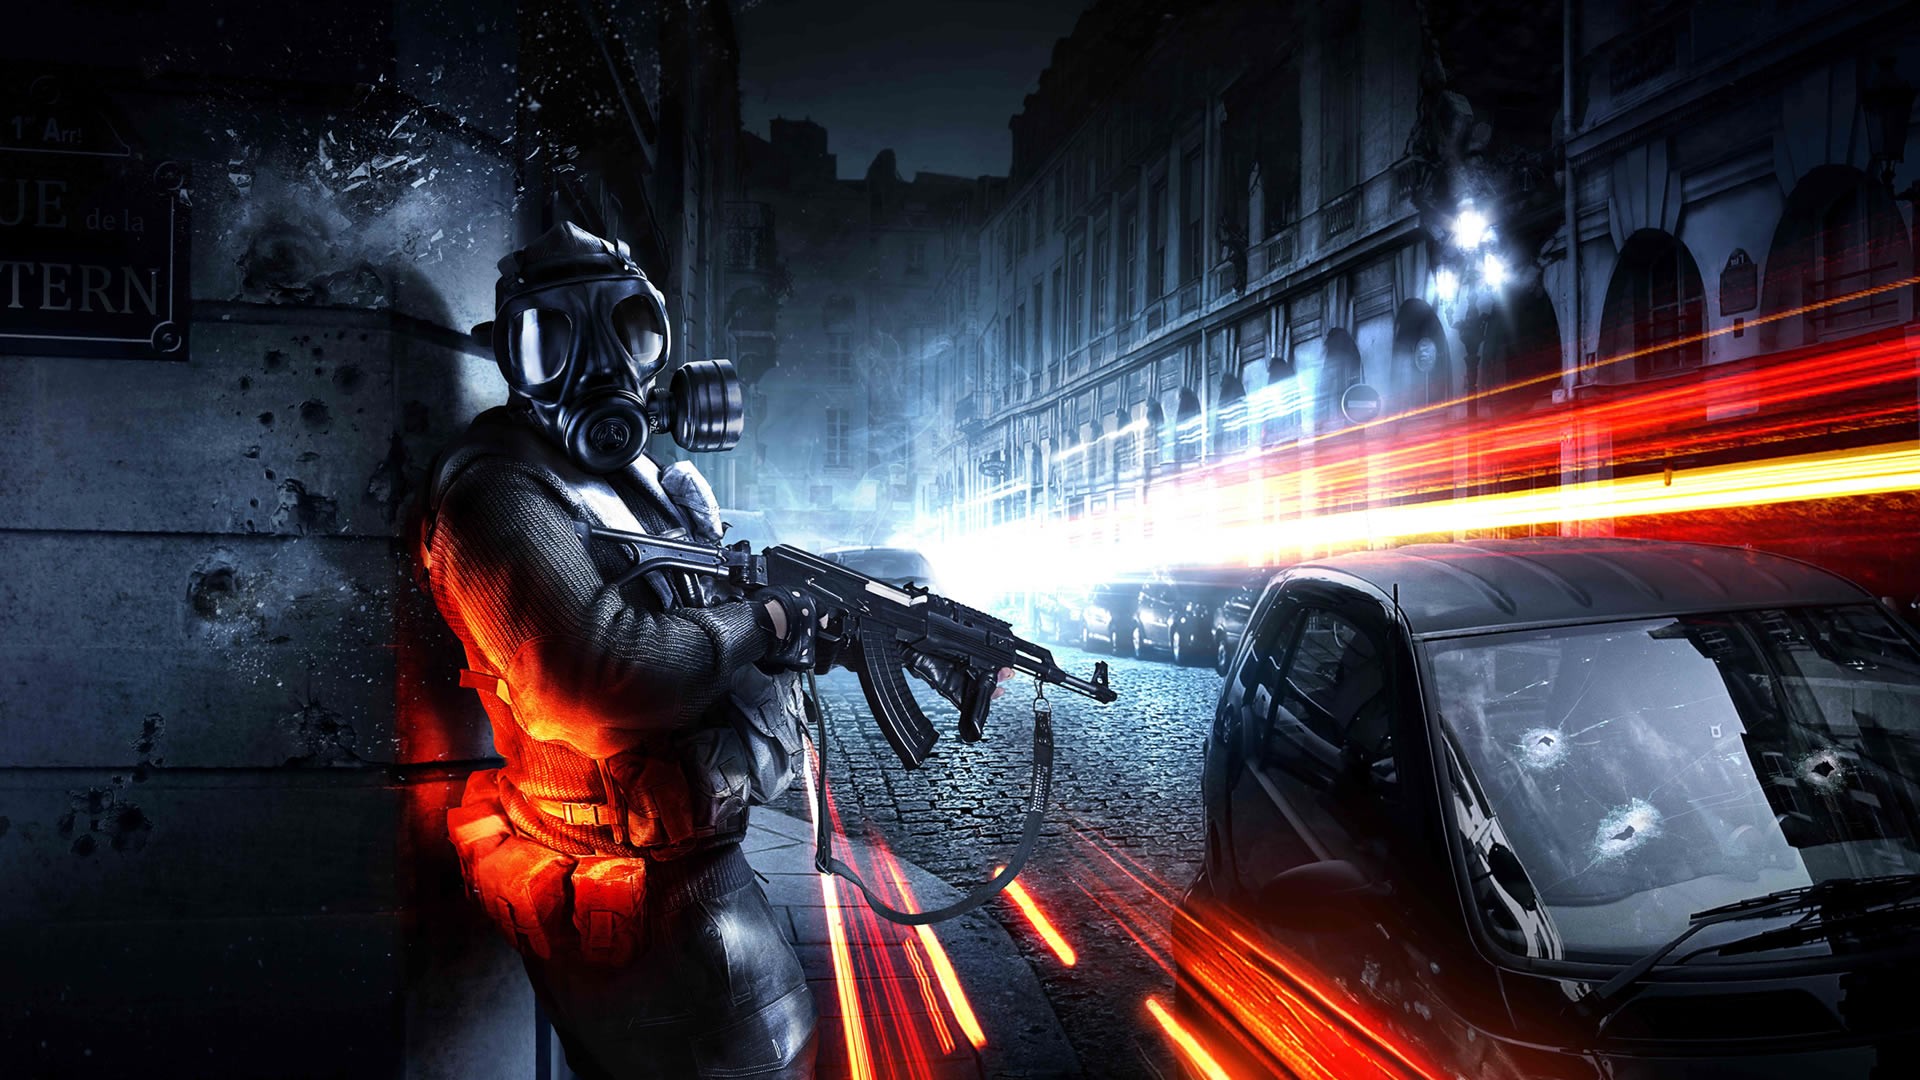 General 1920x1080 gas masks video game art machine gun PC gaming car vehicle street bullet holes Battlefield 3